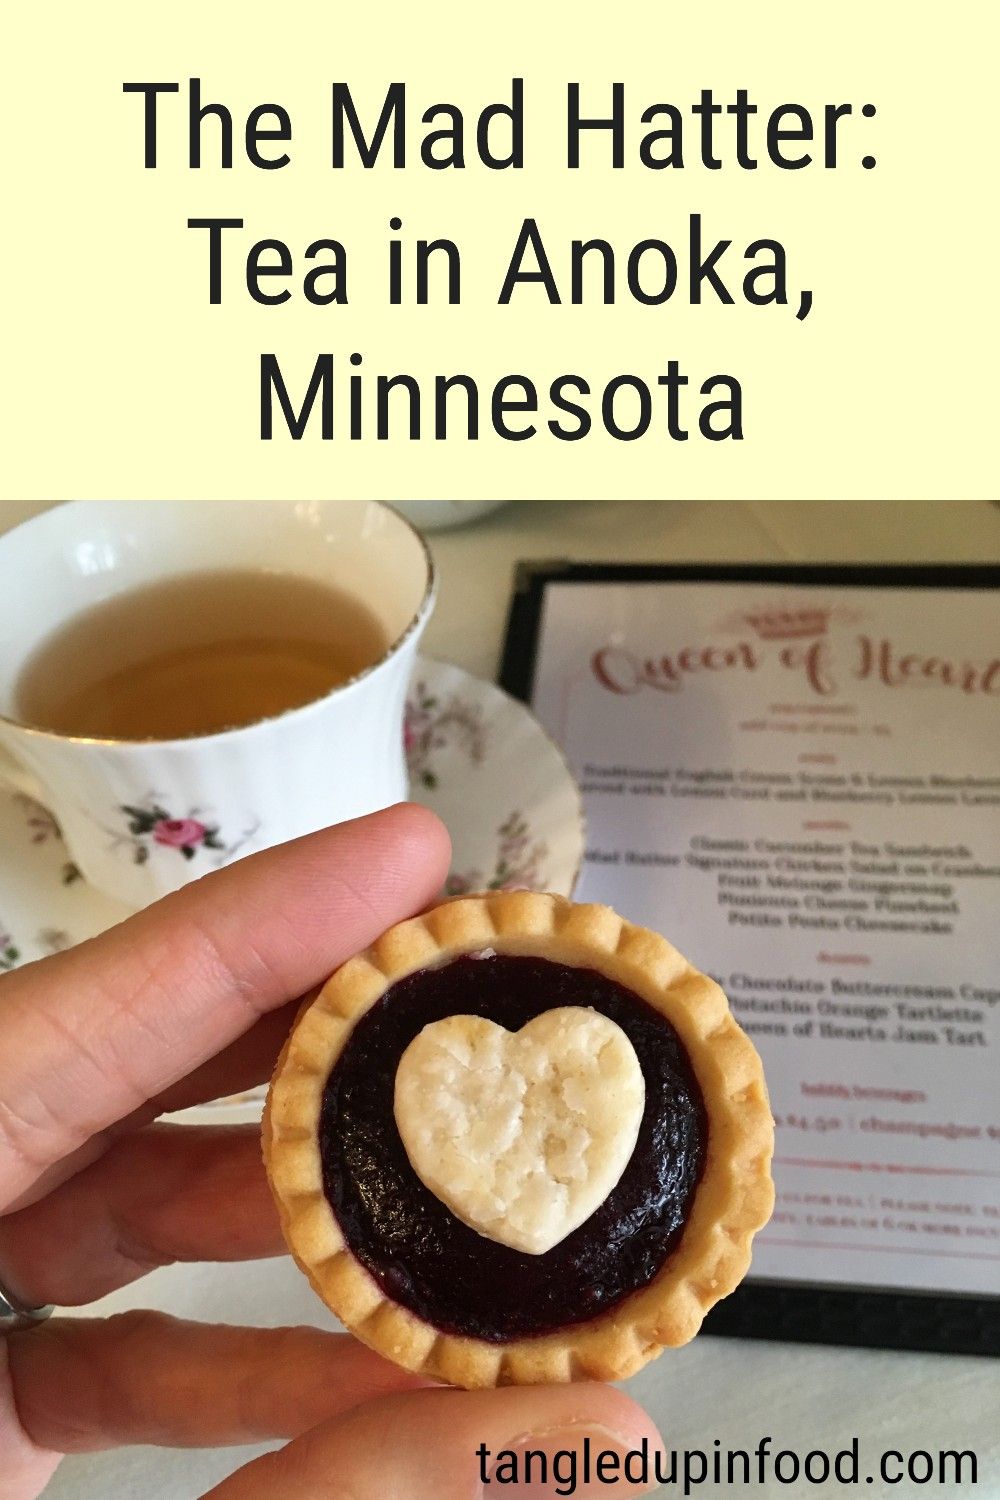 Hand holding miniature jam tart with text reading "The Mad Hatter: Tea in Anoka, Minnesota"